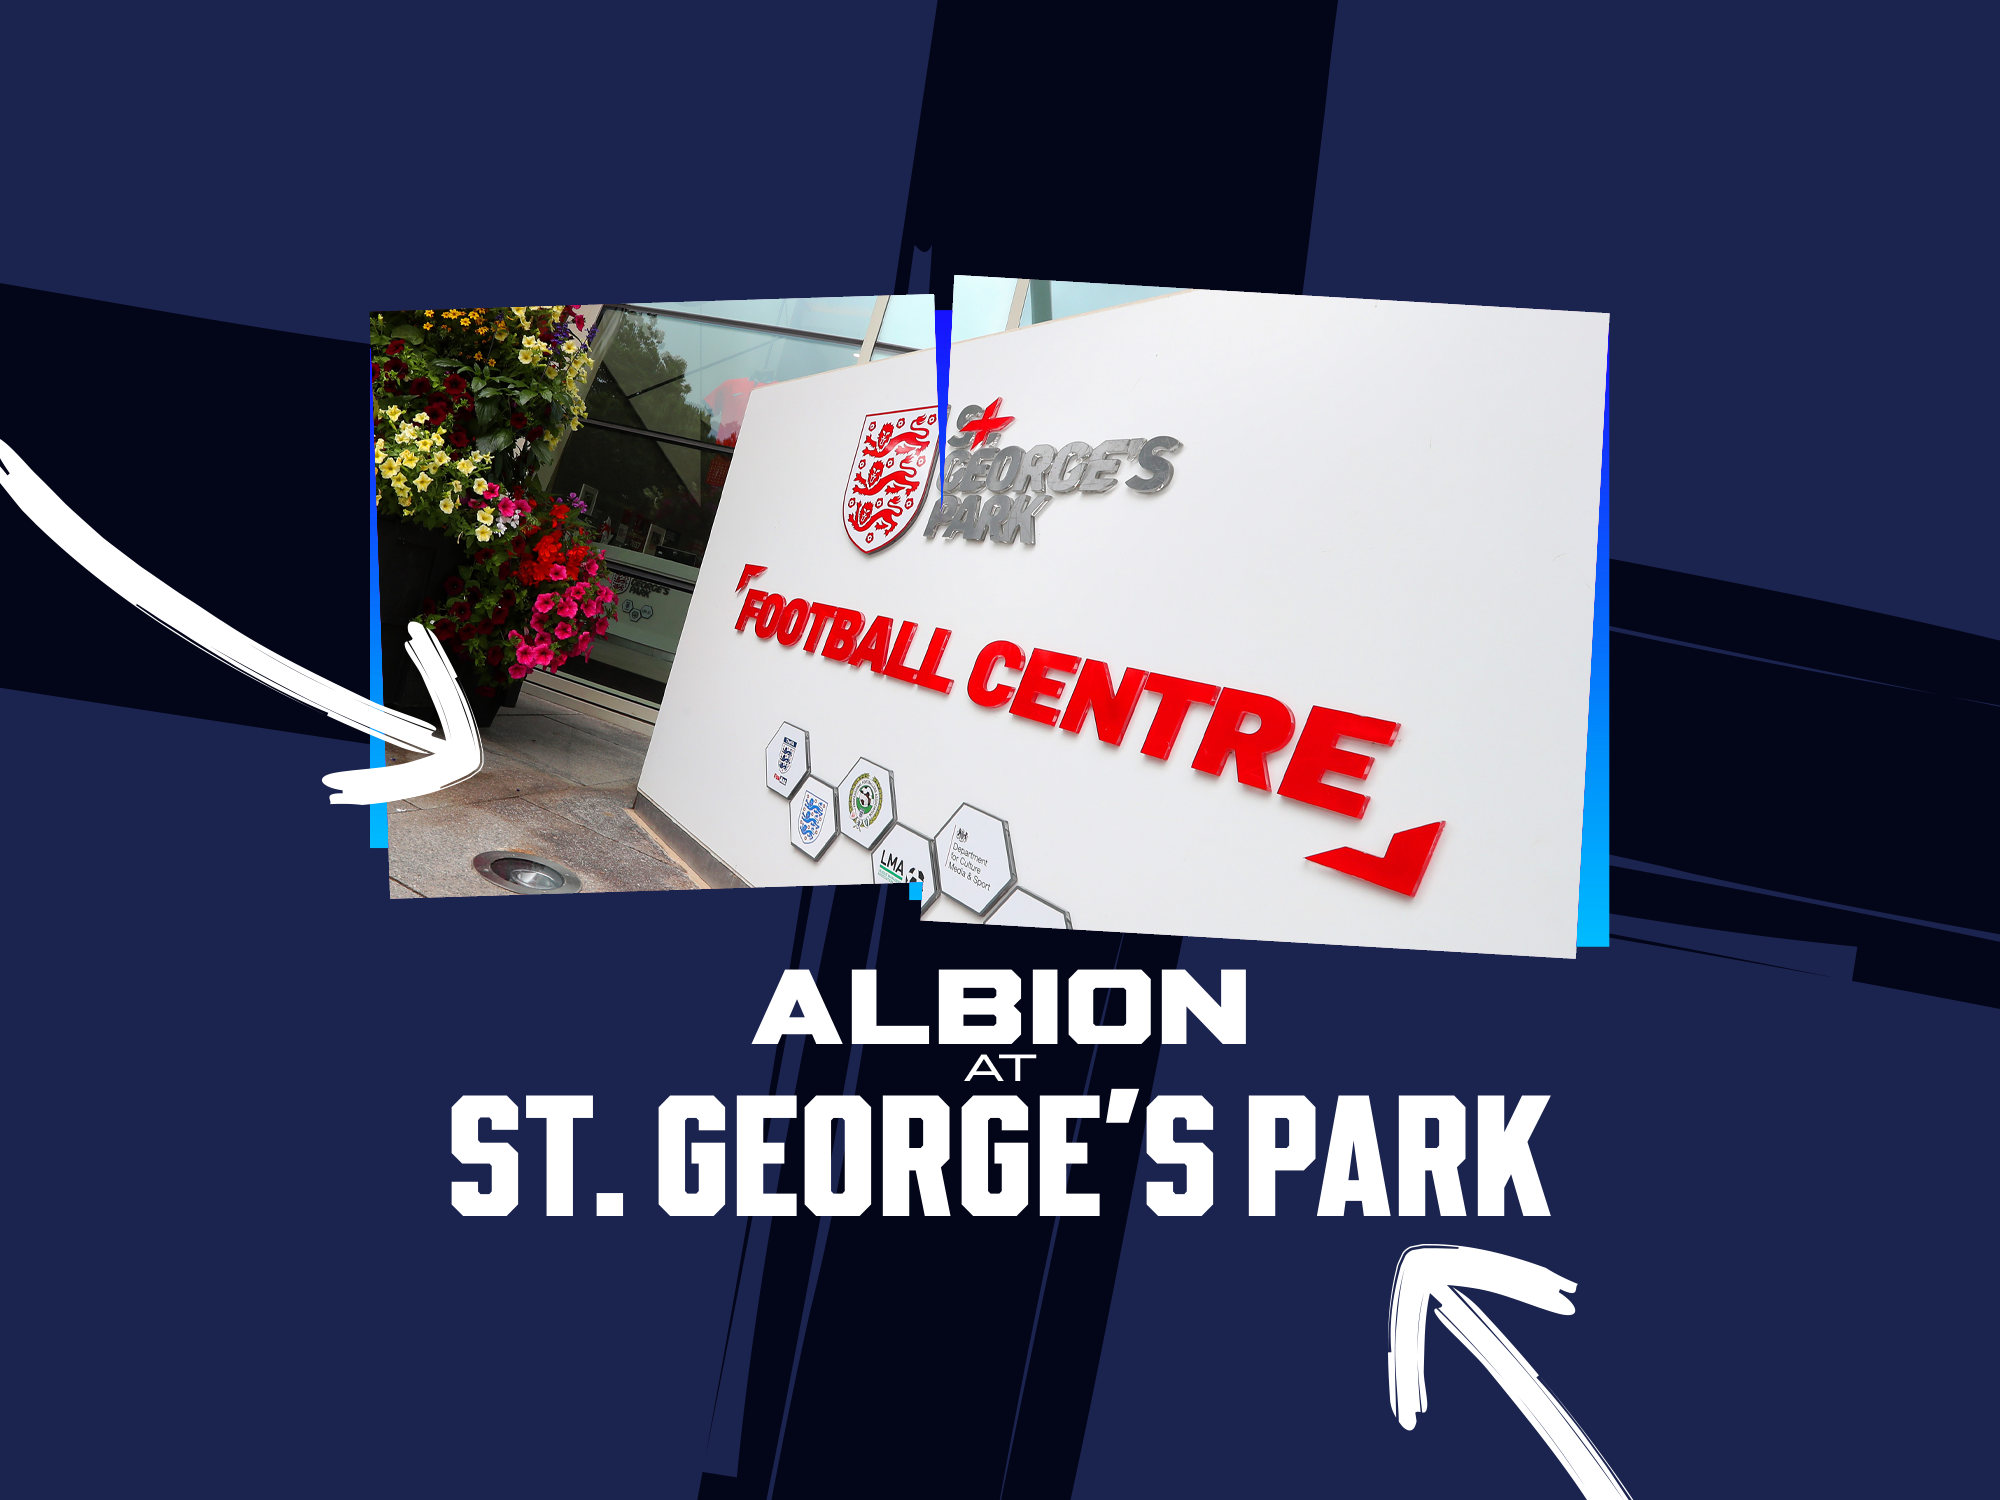 Albon at St George's Park graphic.